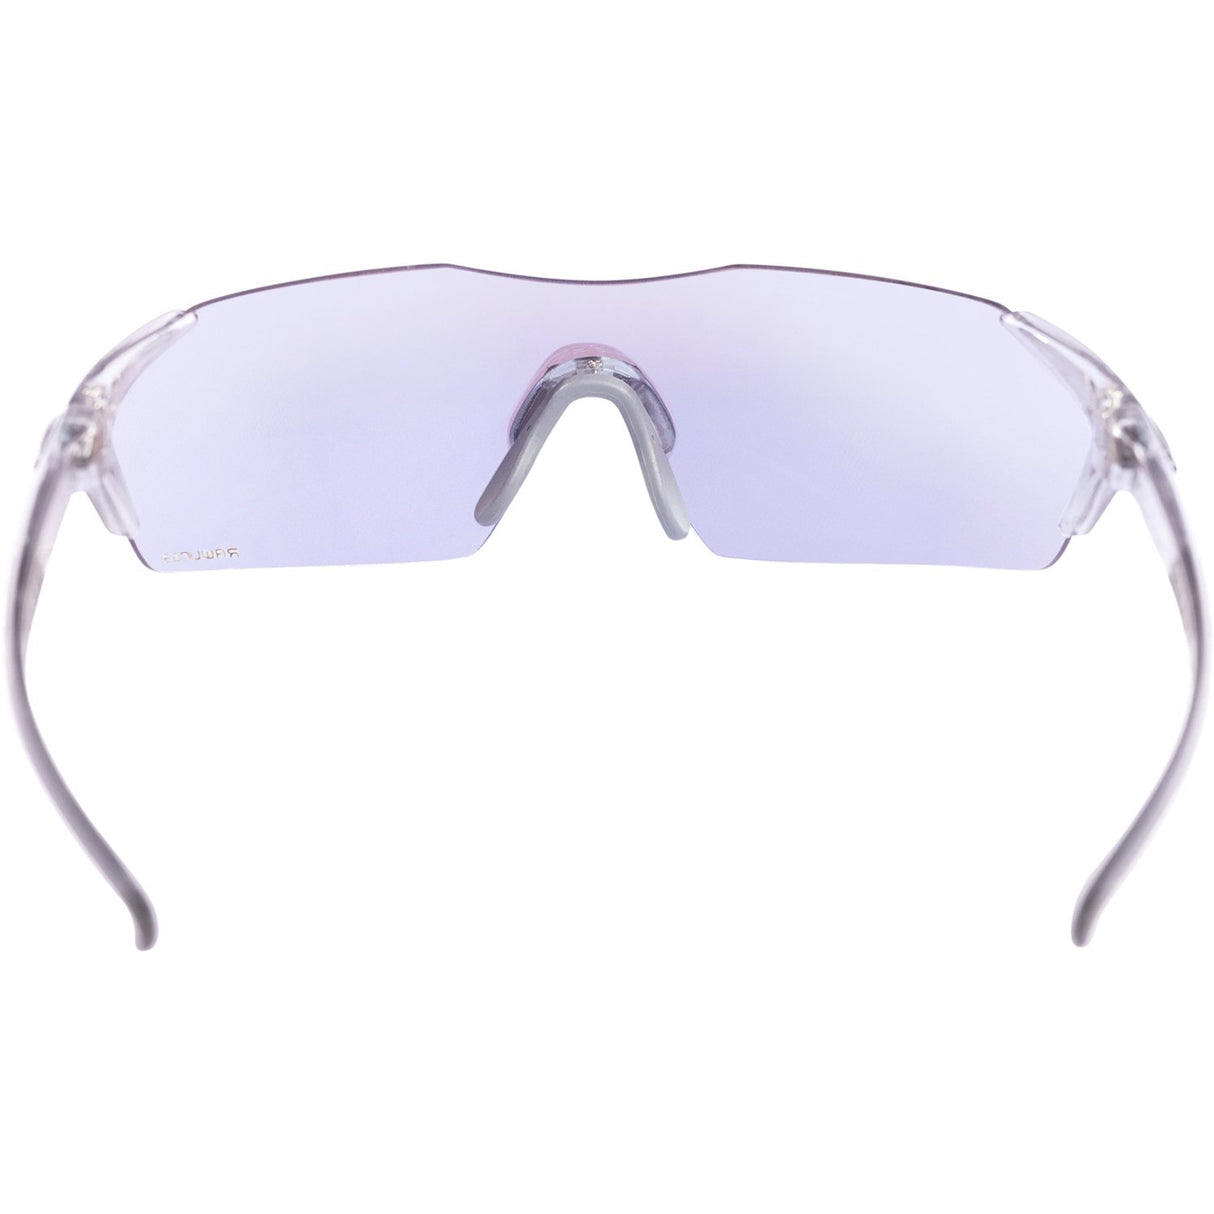 Rawlings Youth RY107 Sunglasses White/Blue